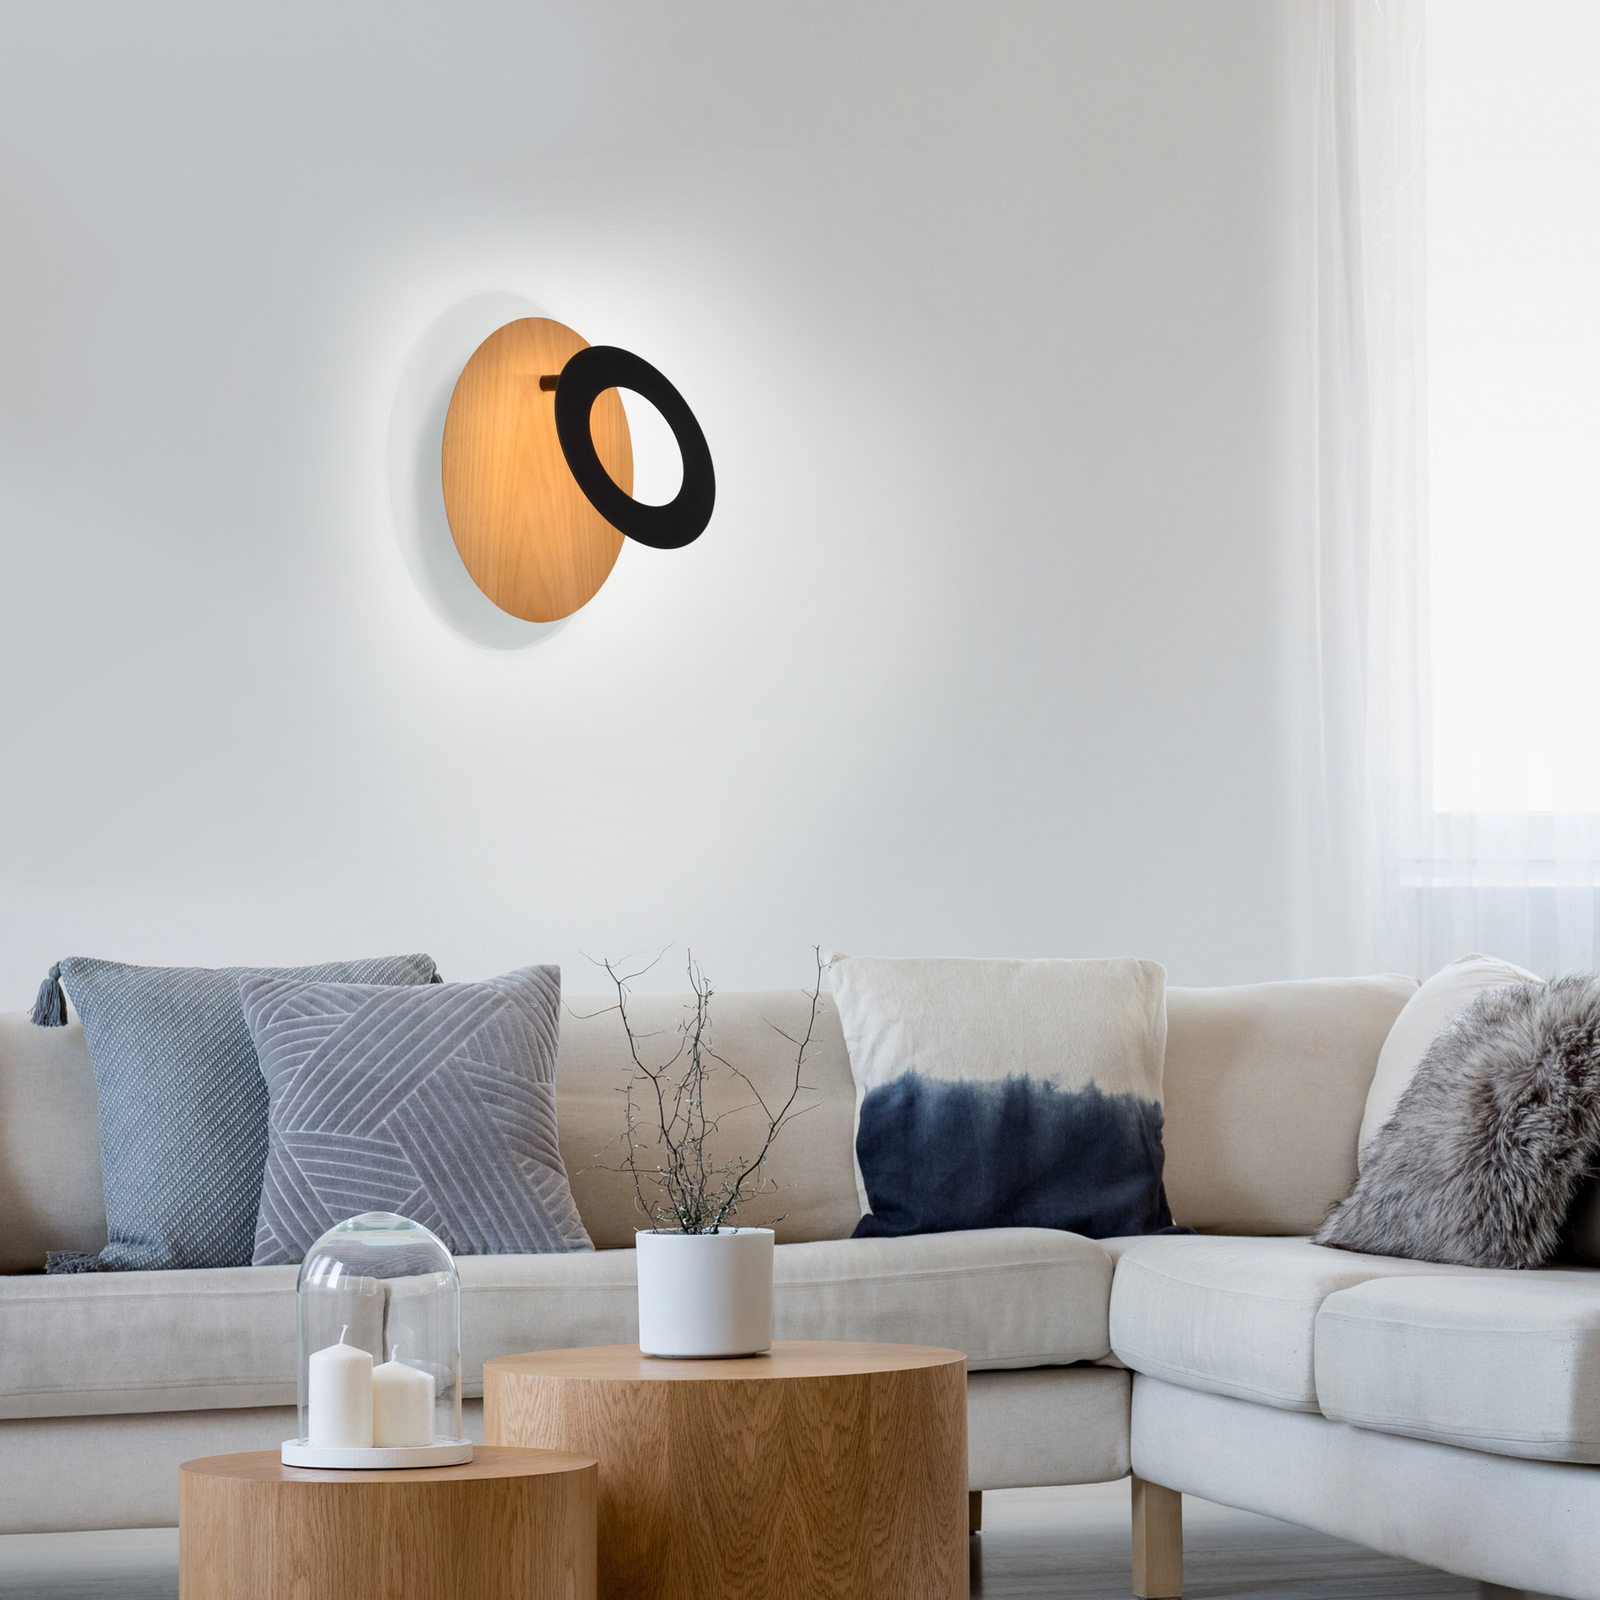 Paul Neuhaus Nevis LED wall light made of wood, round